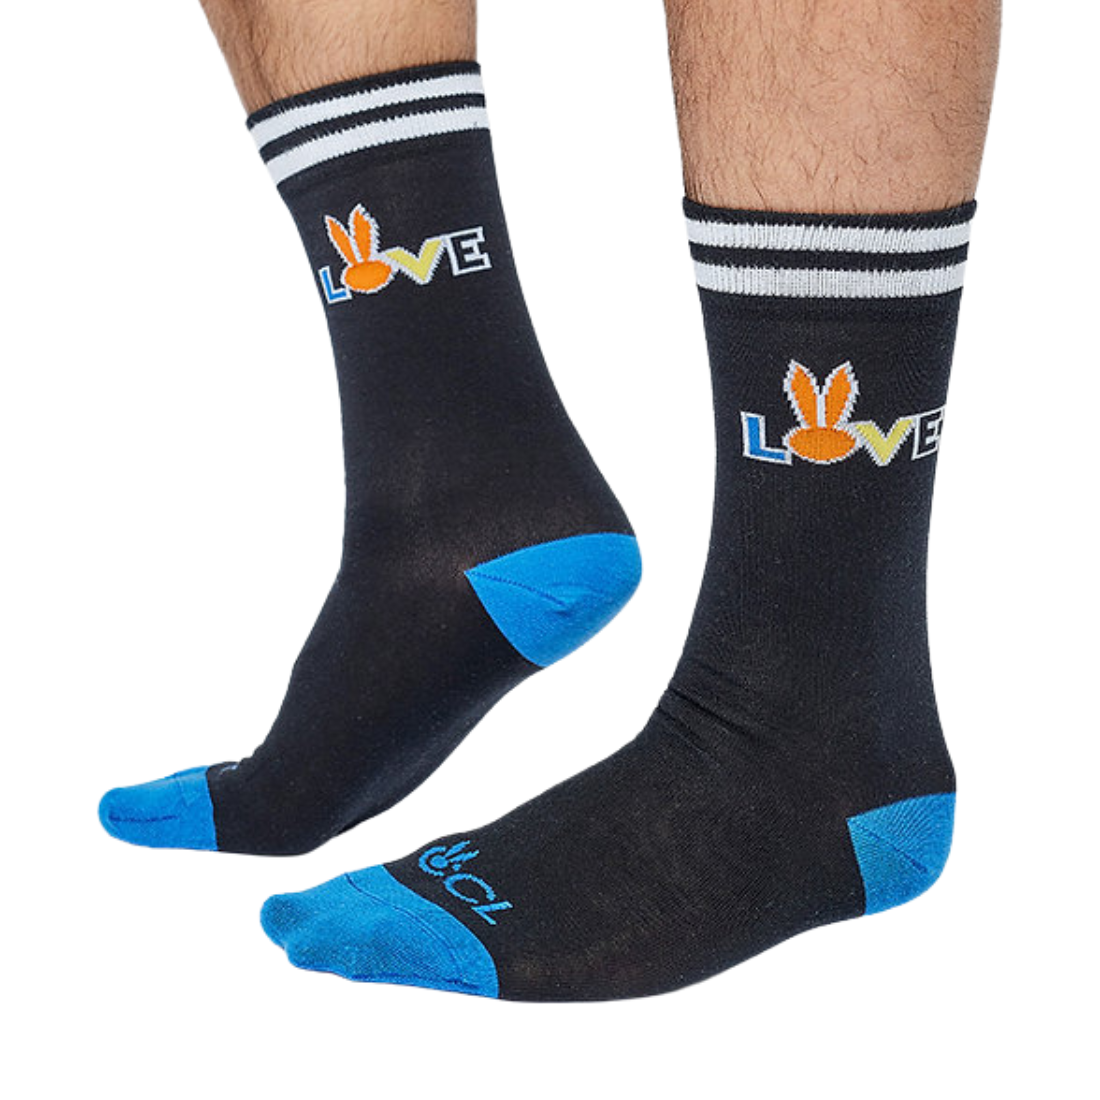 Buy Bunny’s “Love” socks from Cartoon Called Life at Flavourez.